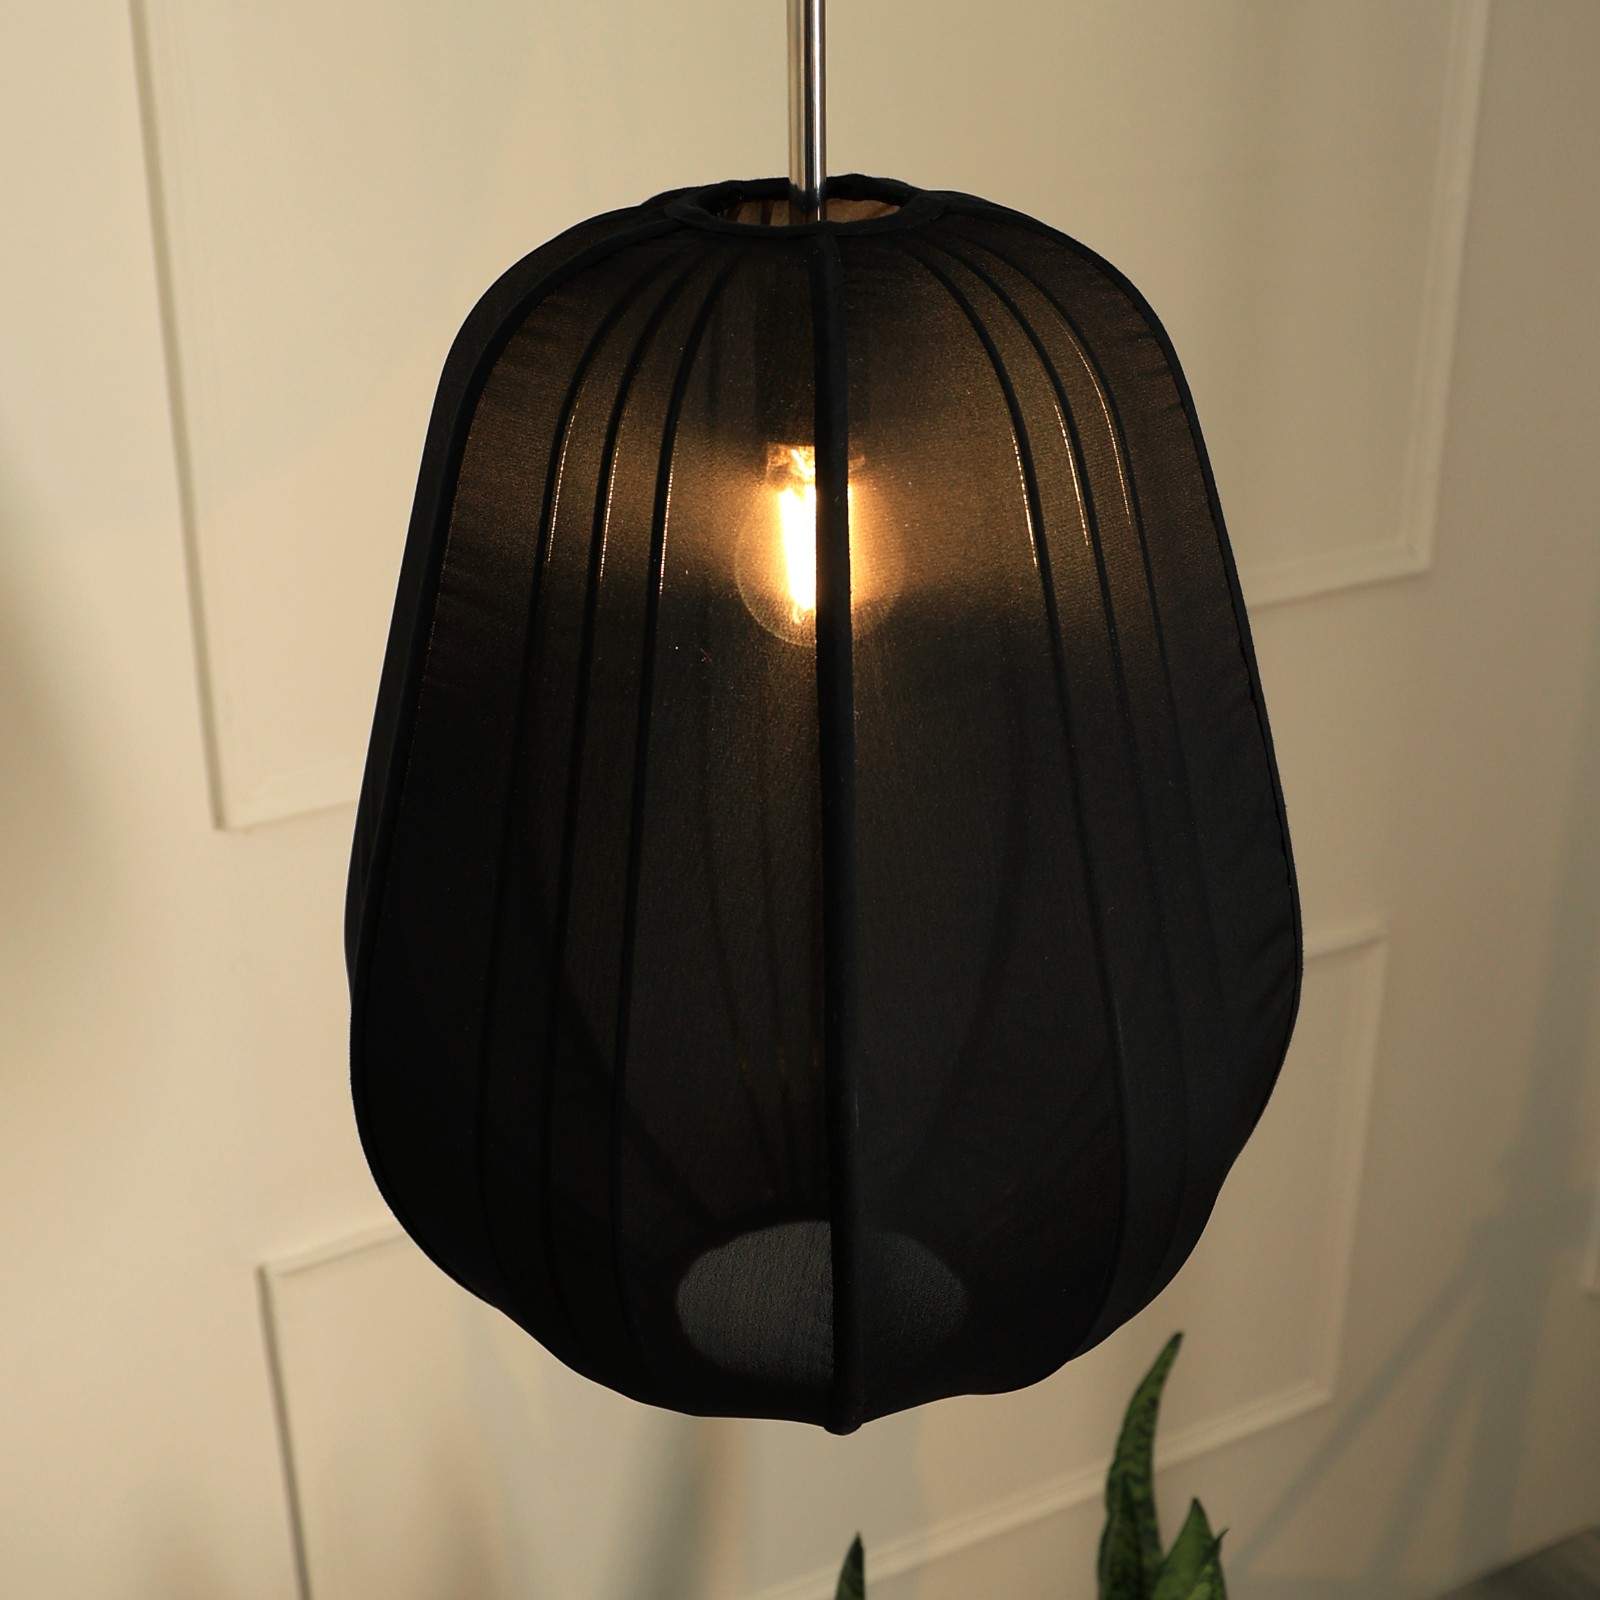 Luxe Collection - Rome Lamp  - Premium Chiffon Fabric, Metallic Spacer, Soft Warm Glow, Mood Enhancement Lighting